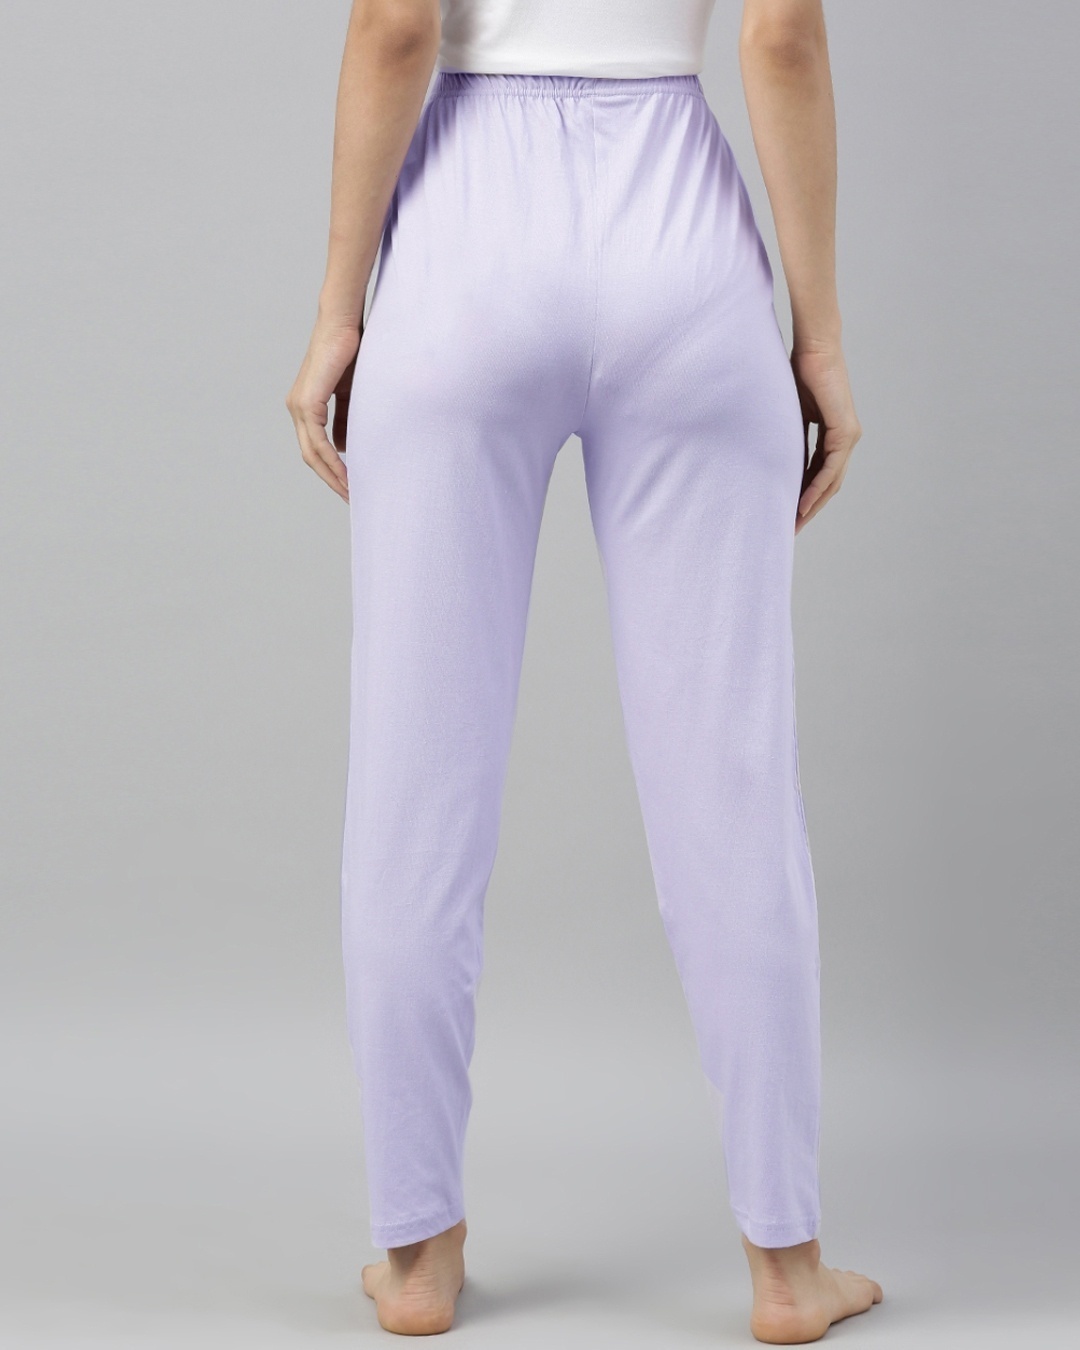 Shop Purple Solid Trackpants-Back